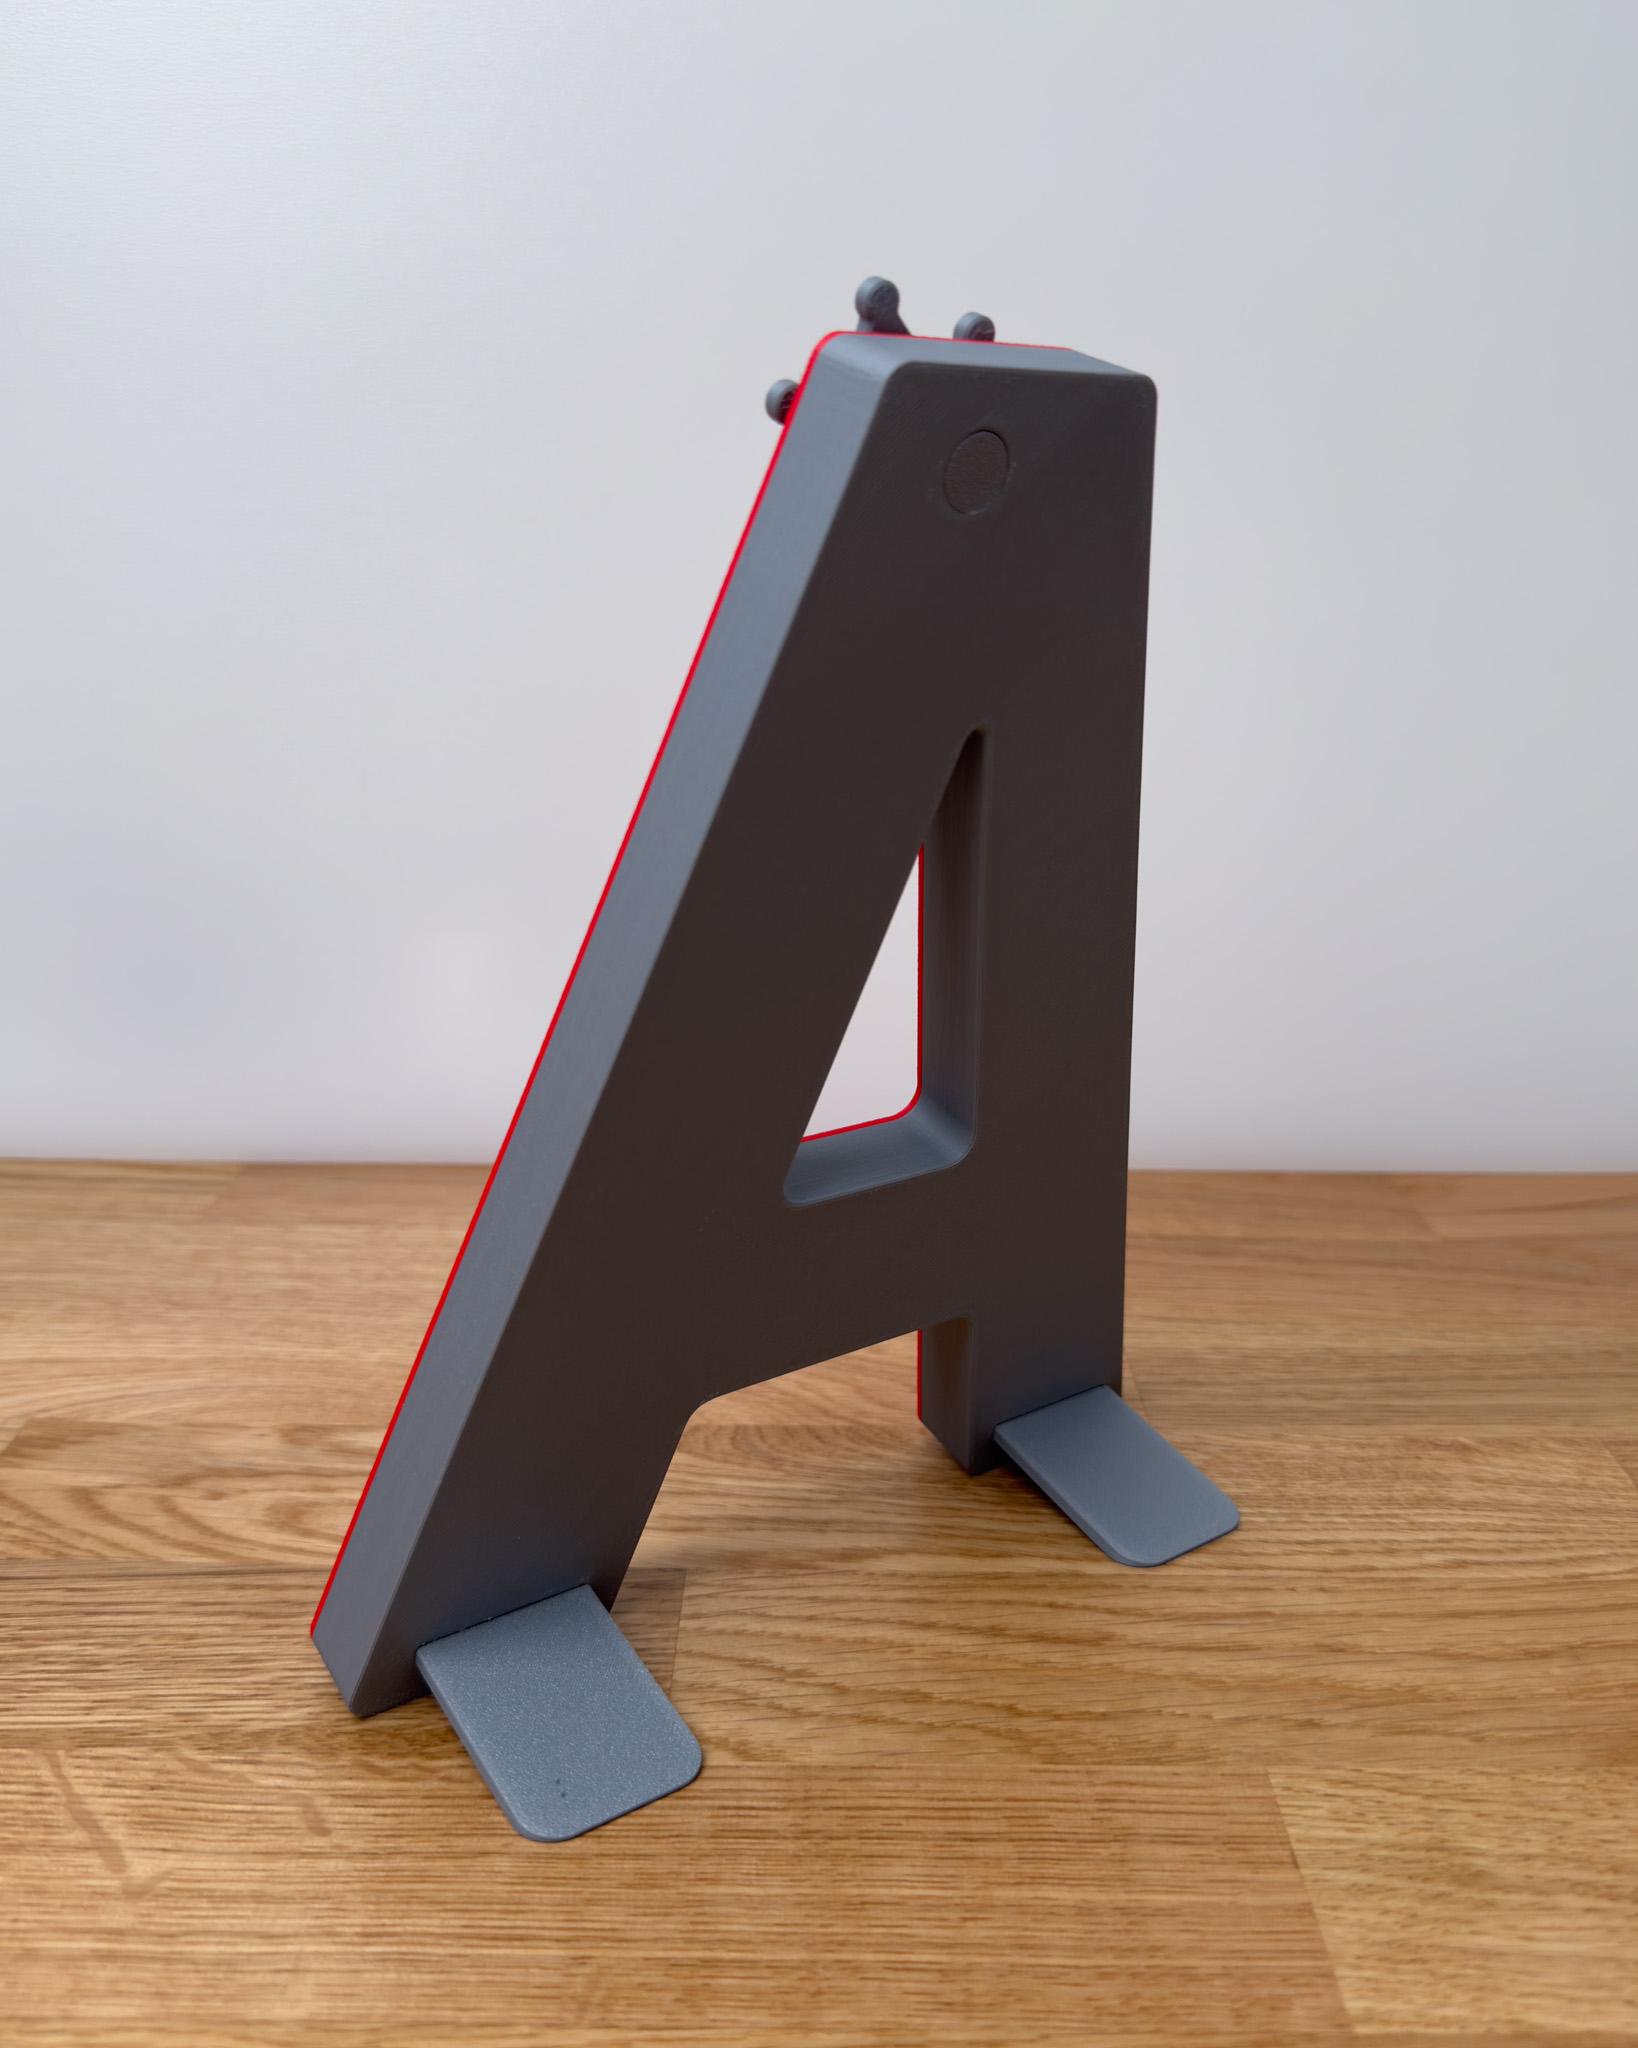 3D Letter E - by TeeTi3D 3d model